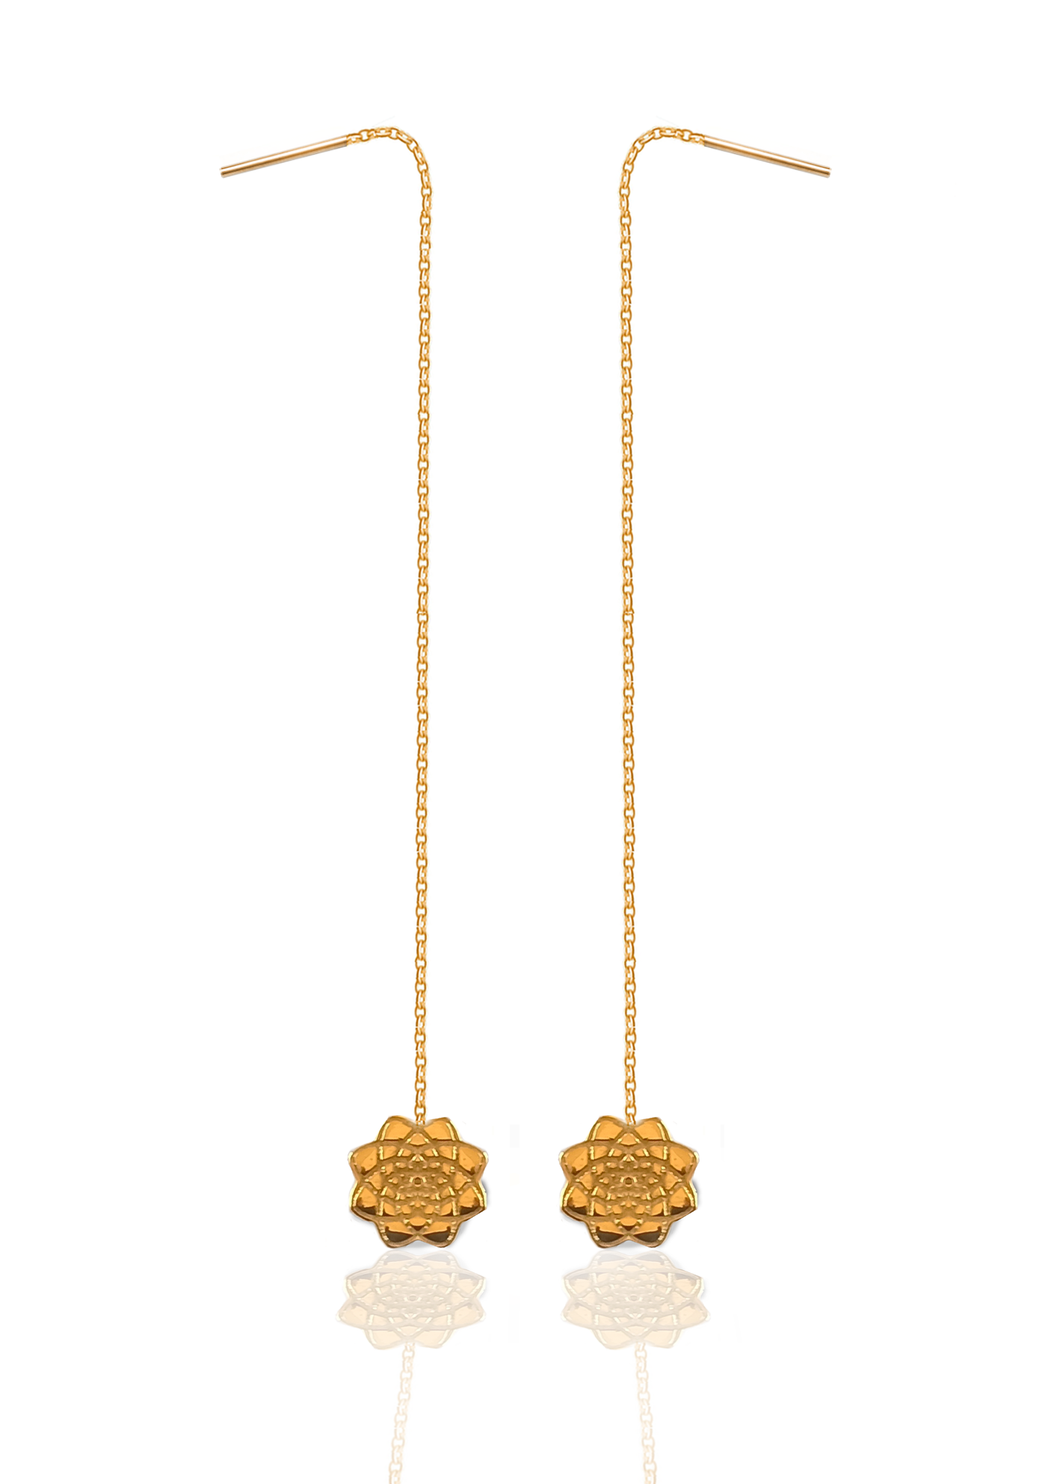 Parallel Dosha Kapha / Vata / Pitta silver 925 Gold plated earrings